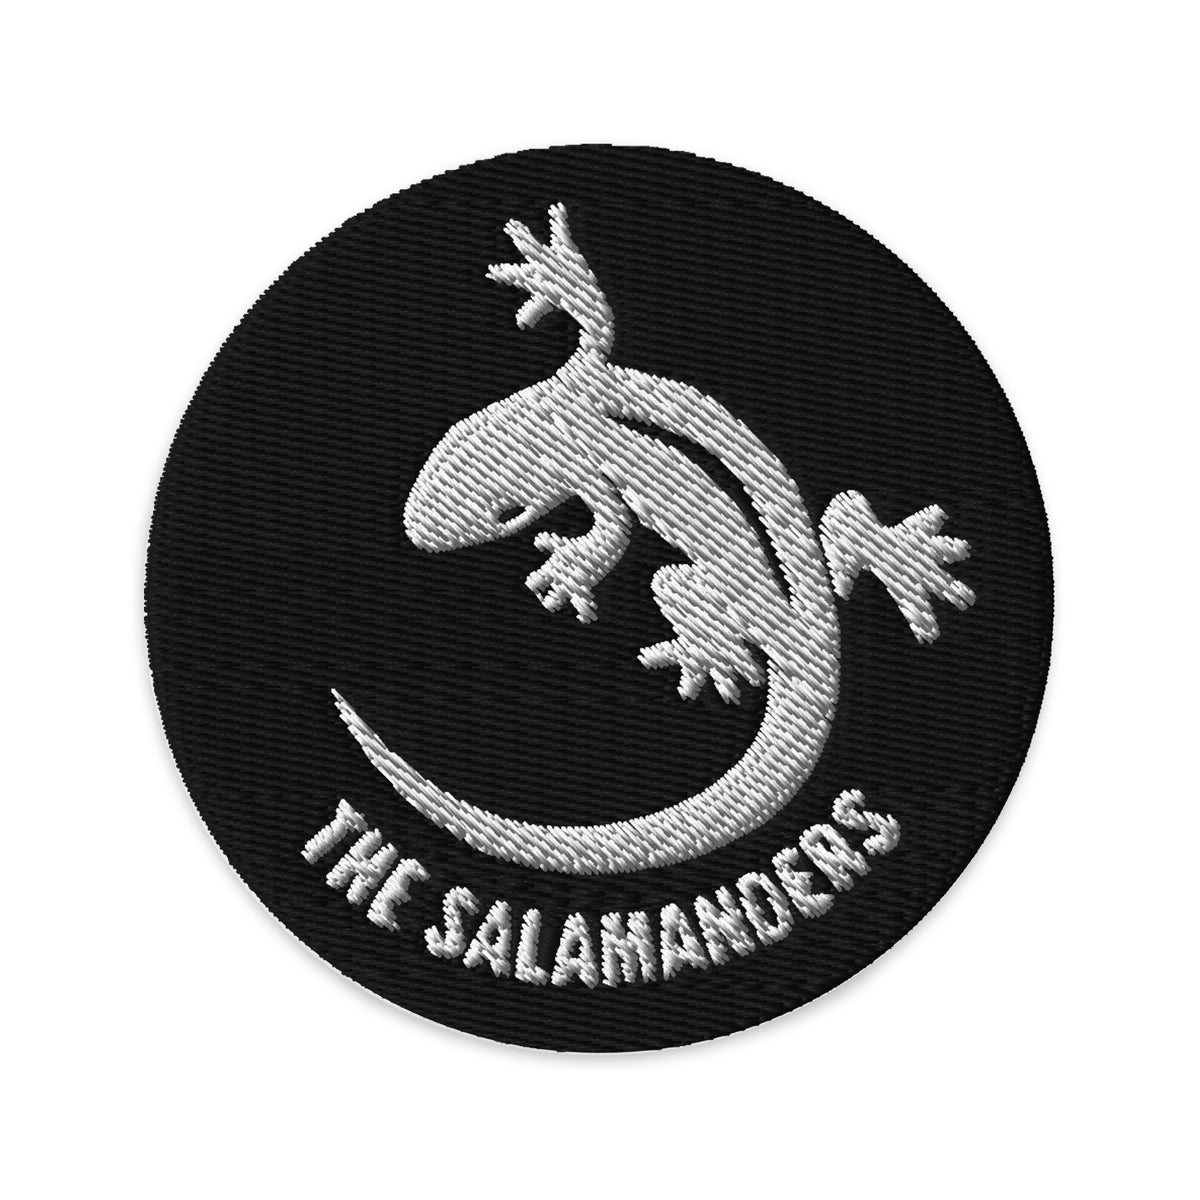 Salamanders Patch